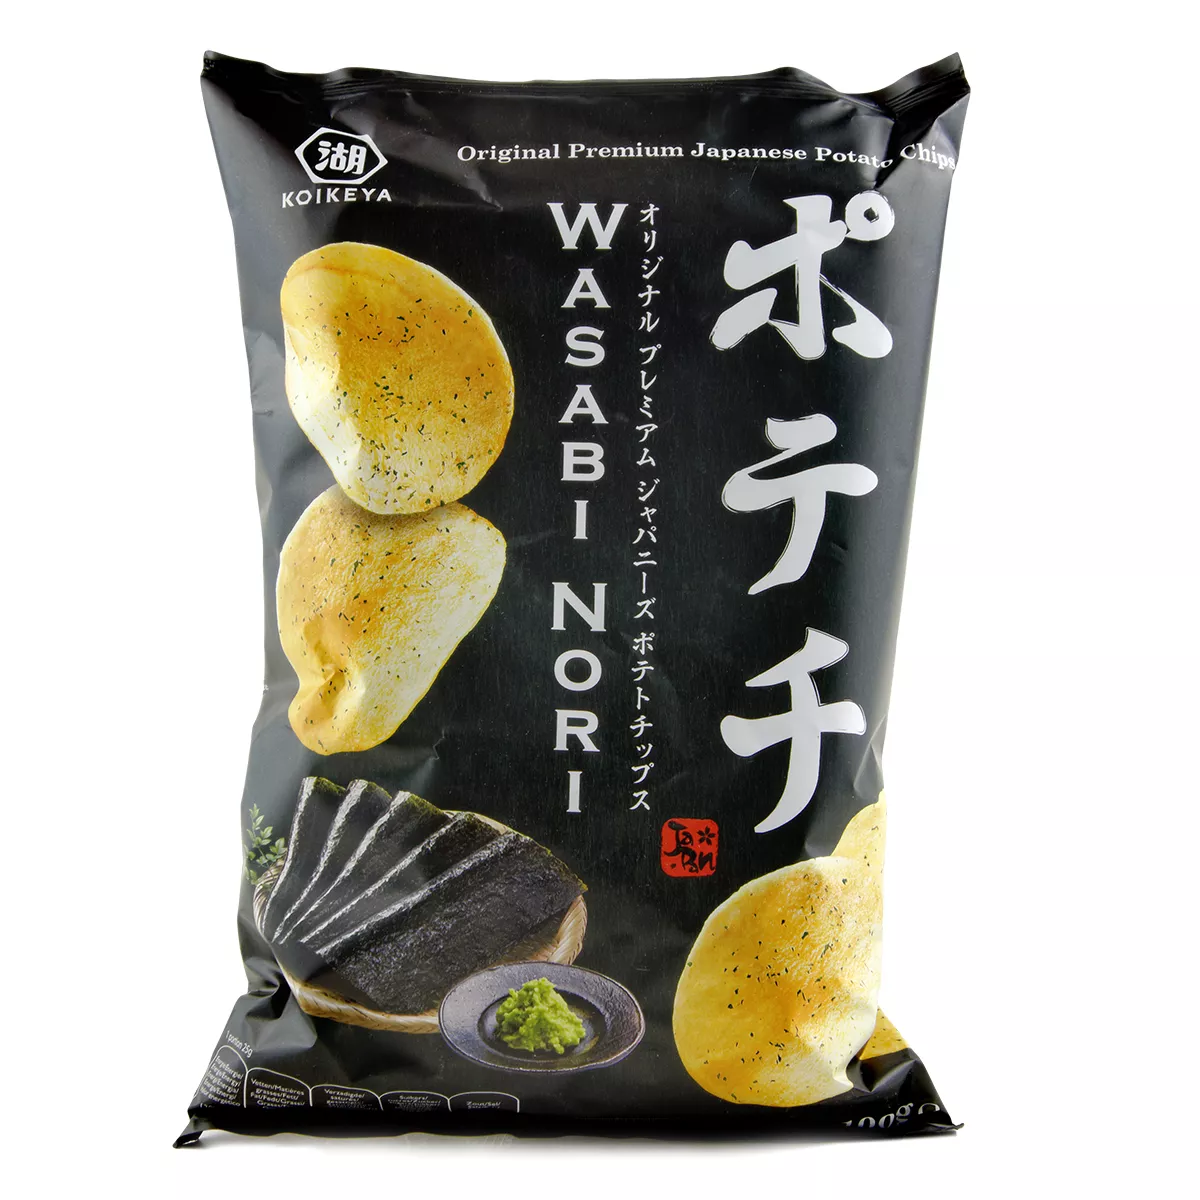 Wasabi & Nori Potato Chips KOIKEYA 100g, [],asianfood.ro